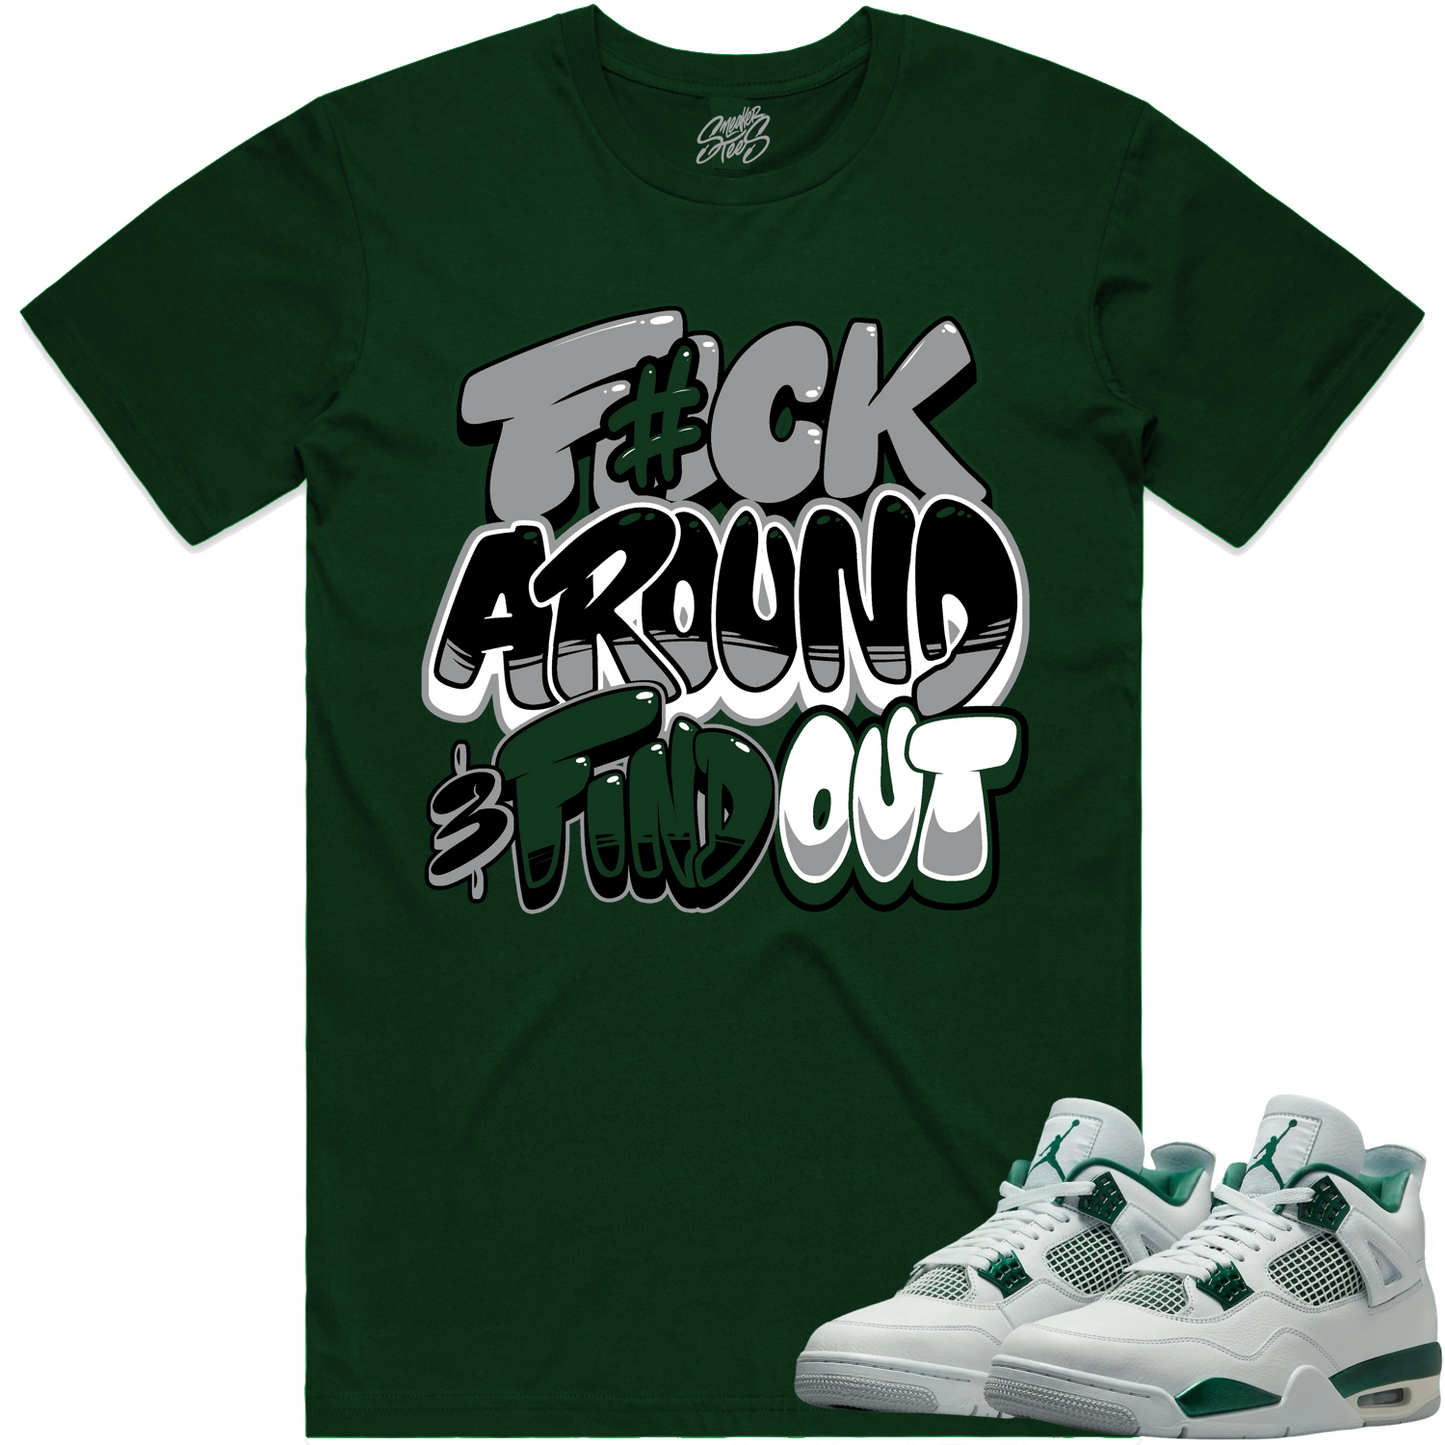 Jordan 4 Oxidized Green 4s Shirt to Match - OXIDIZED GREEN F#CK